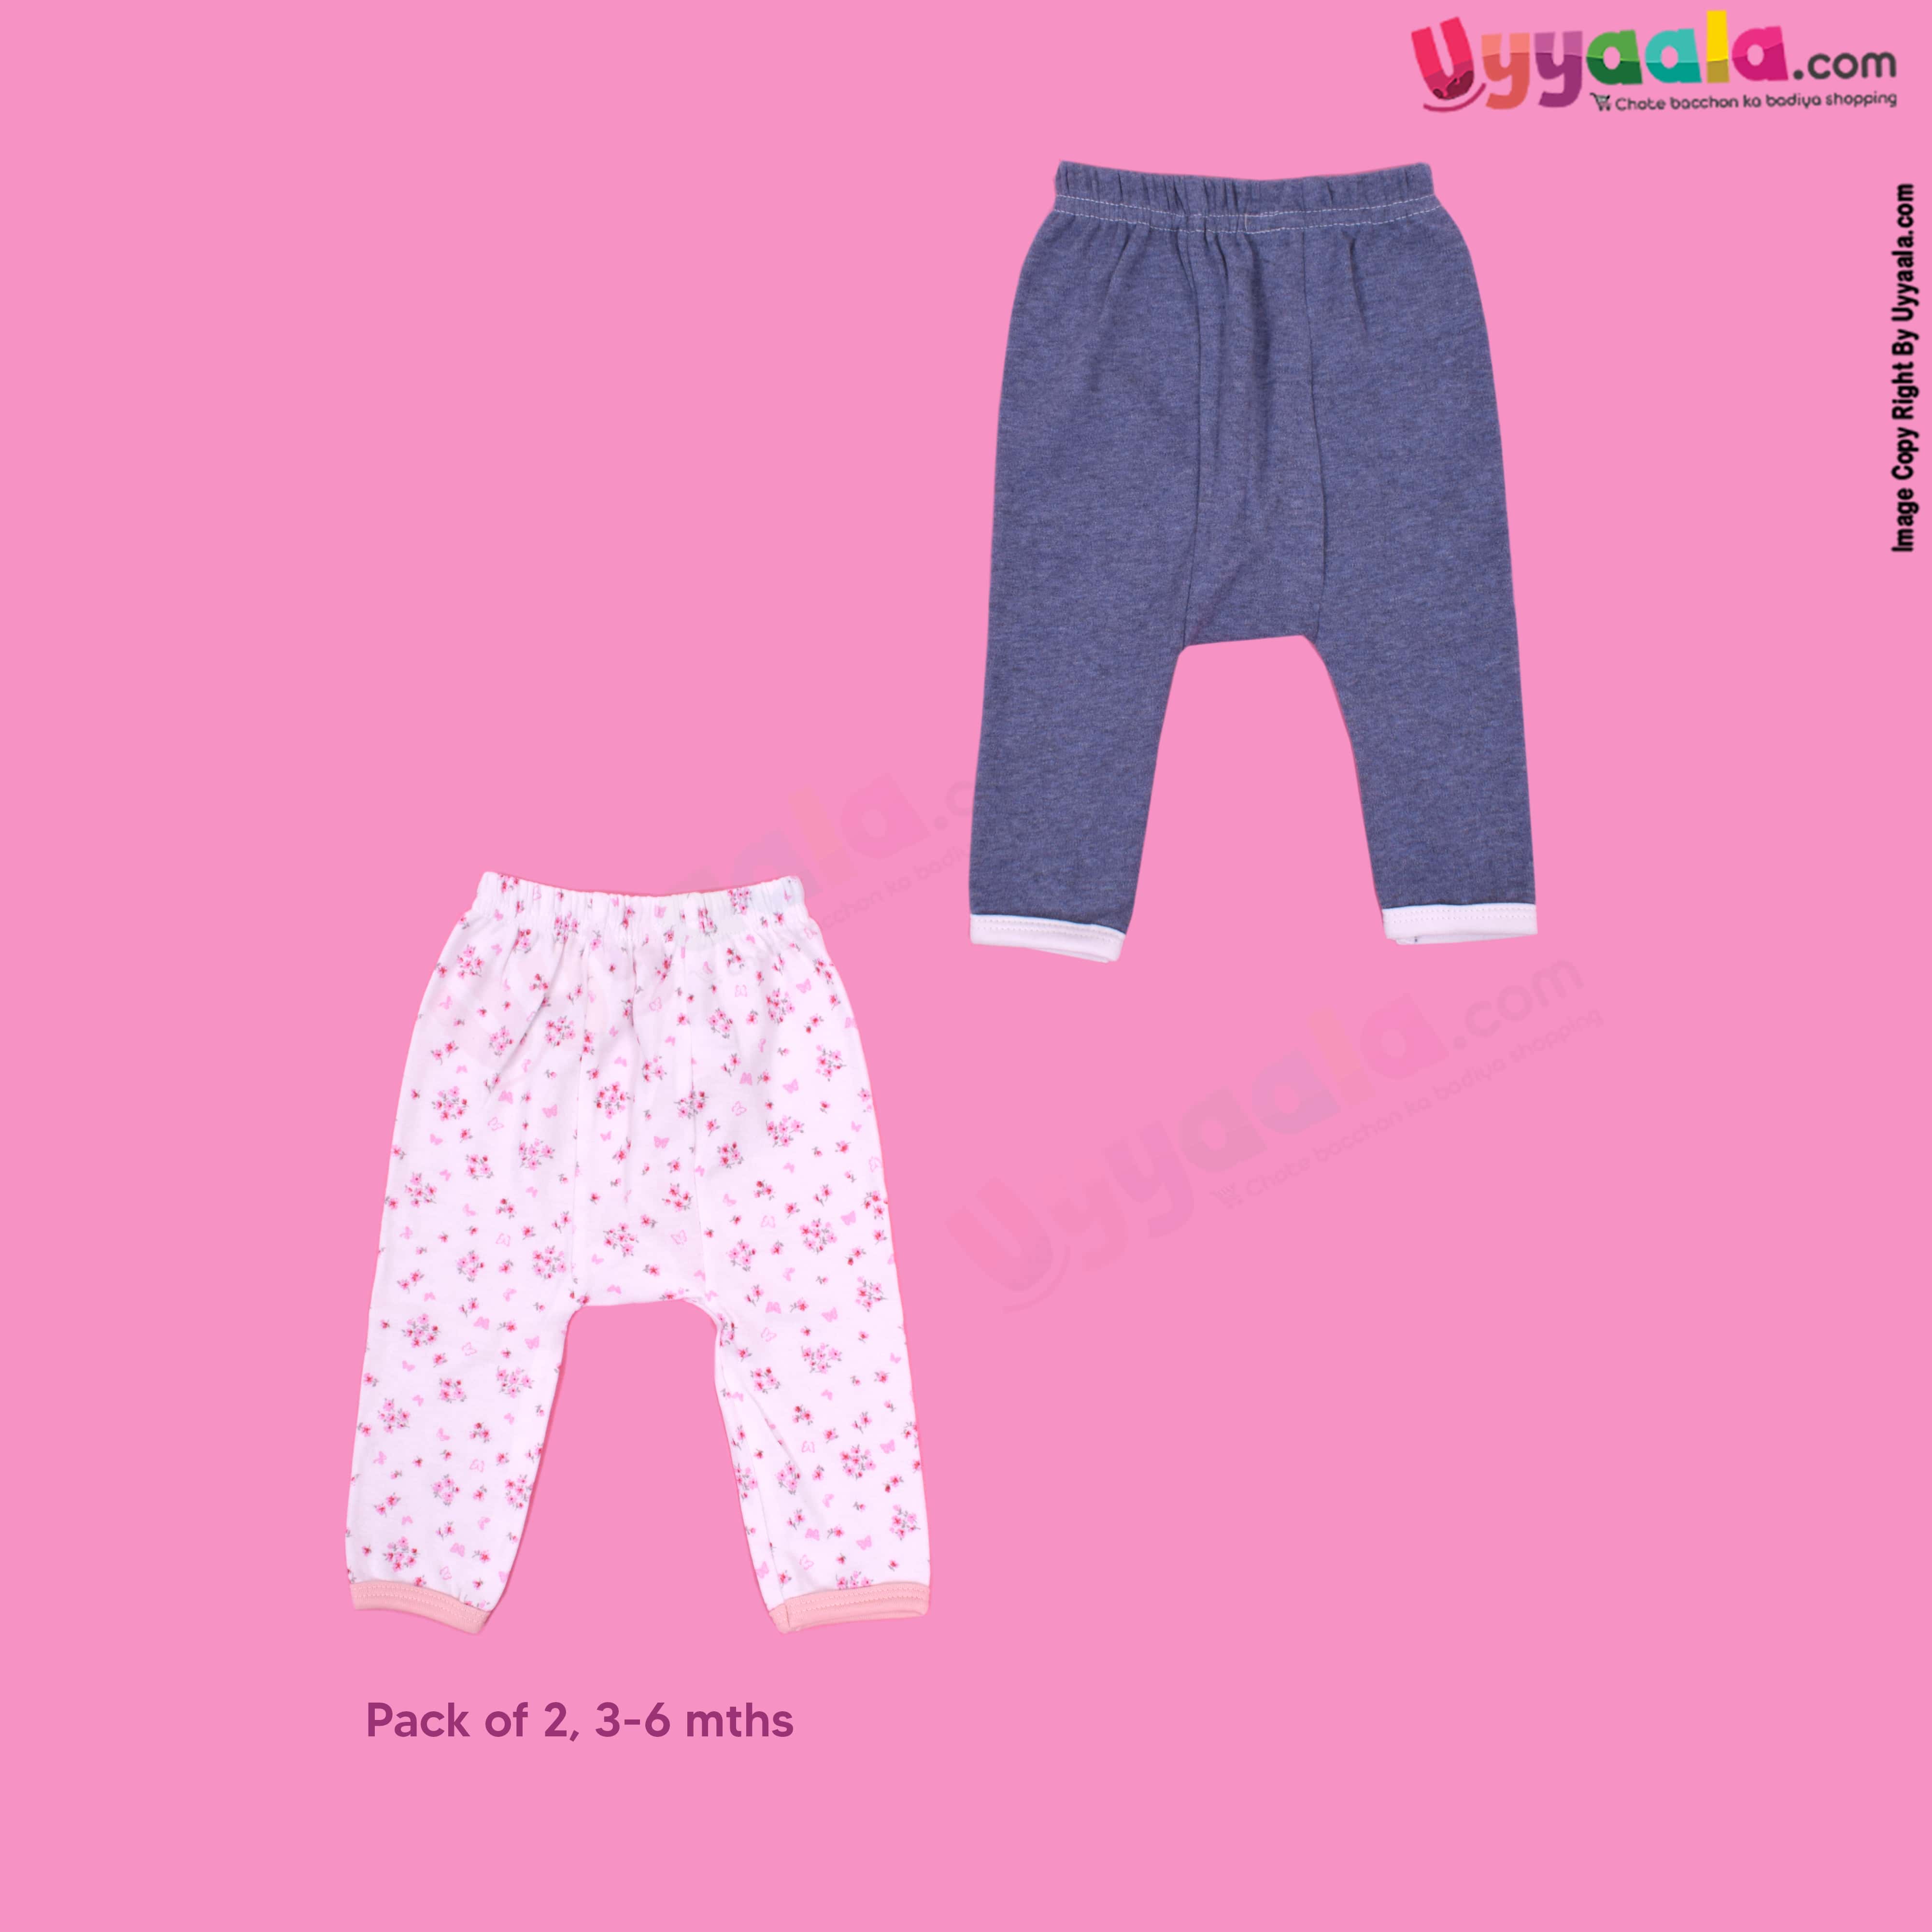 BLOSSOM JUNIOR Panties ,premium cotton panties for baby girl, pack of